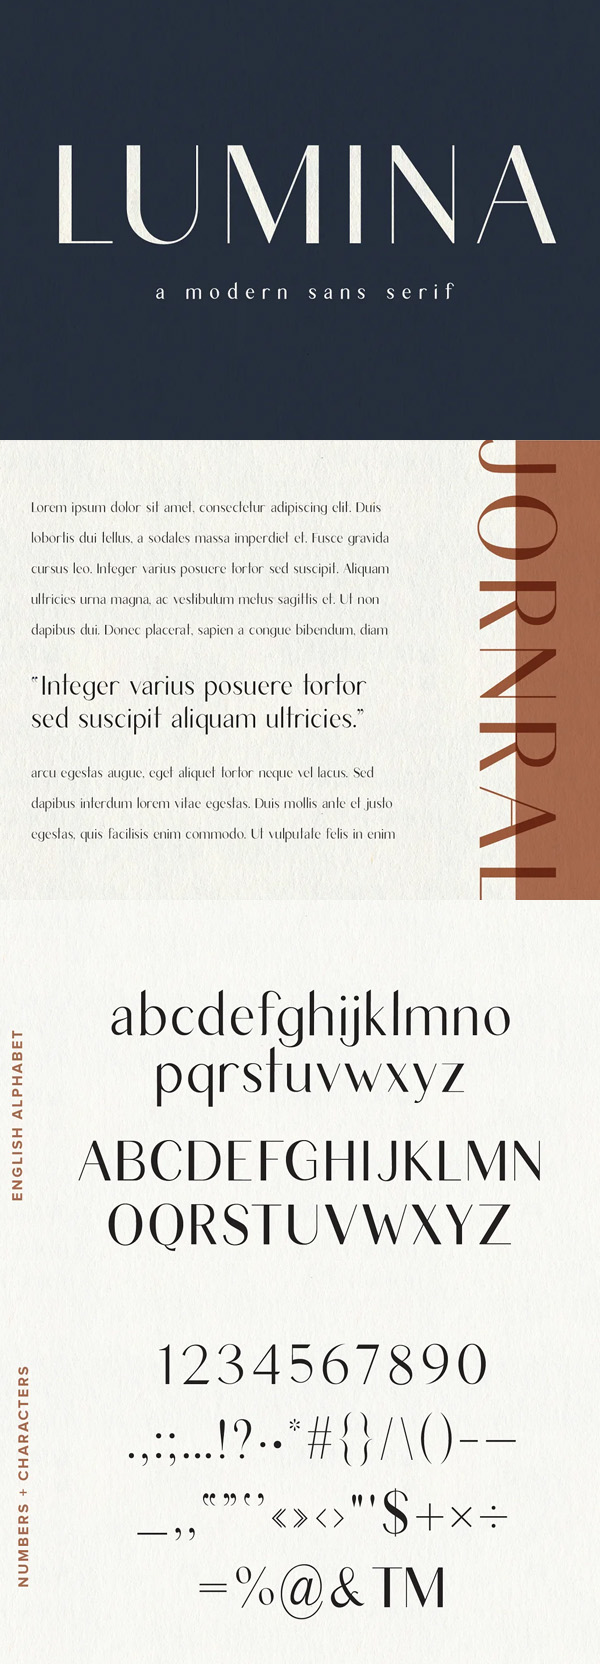 Lumina - Modern Sans Serif Free Font